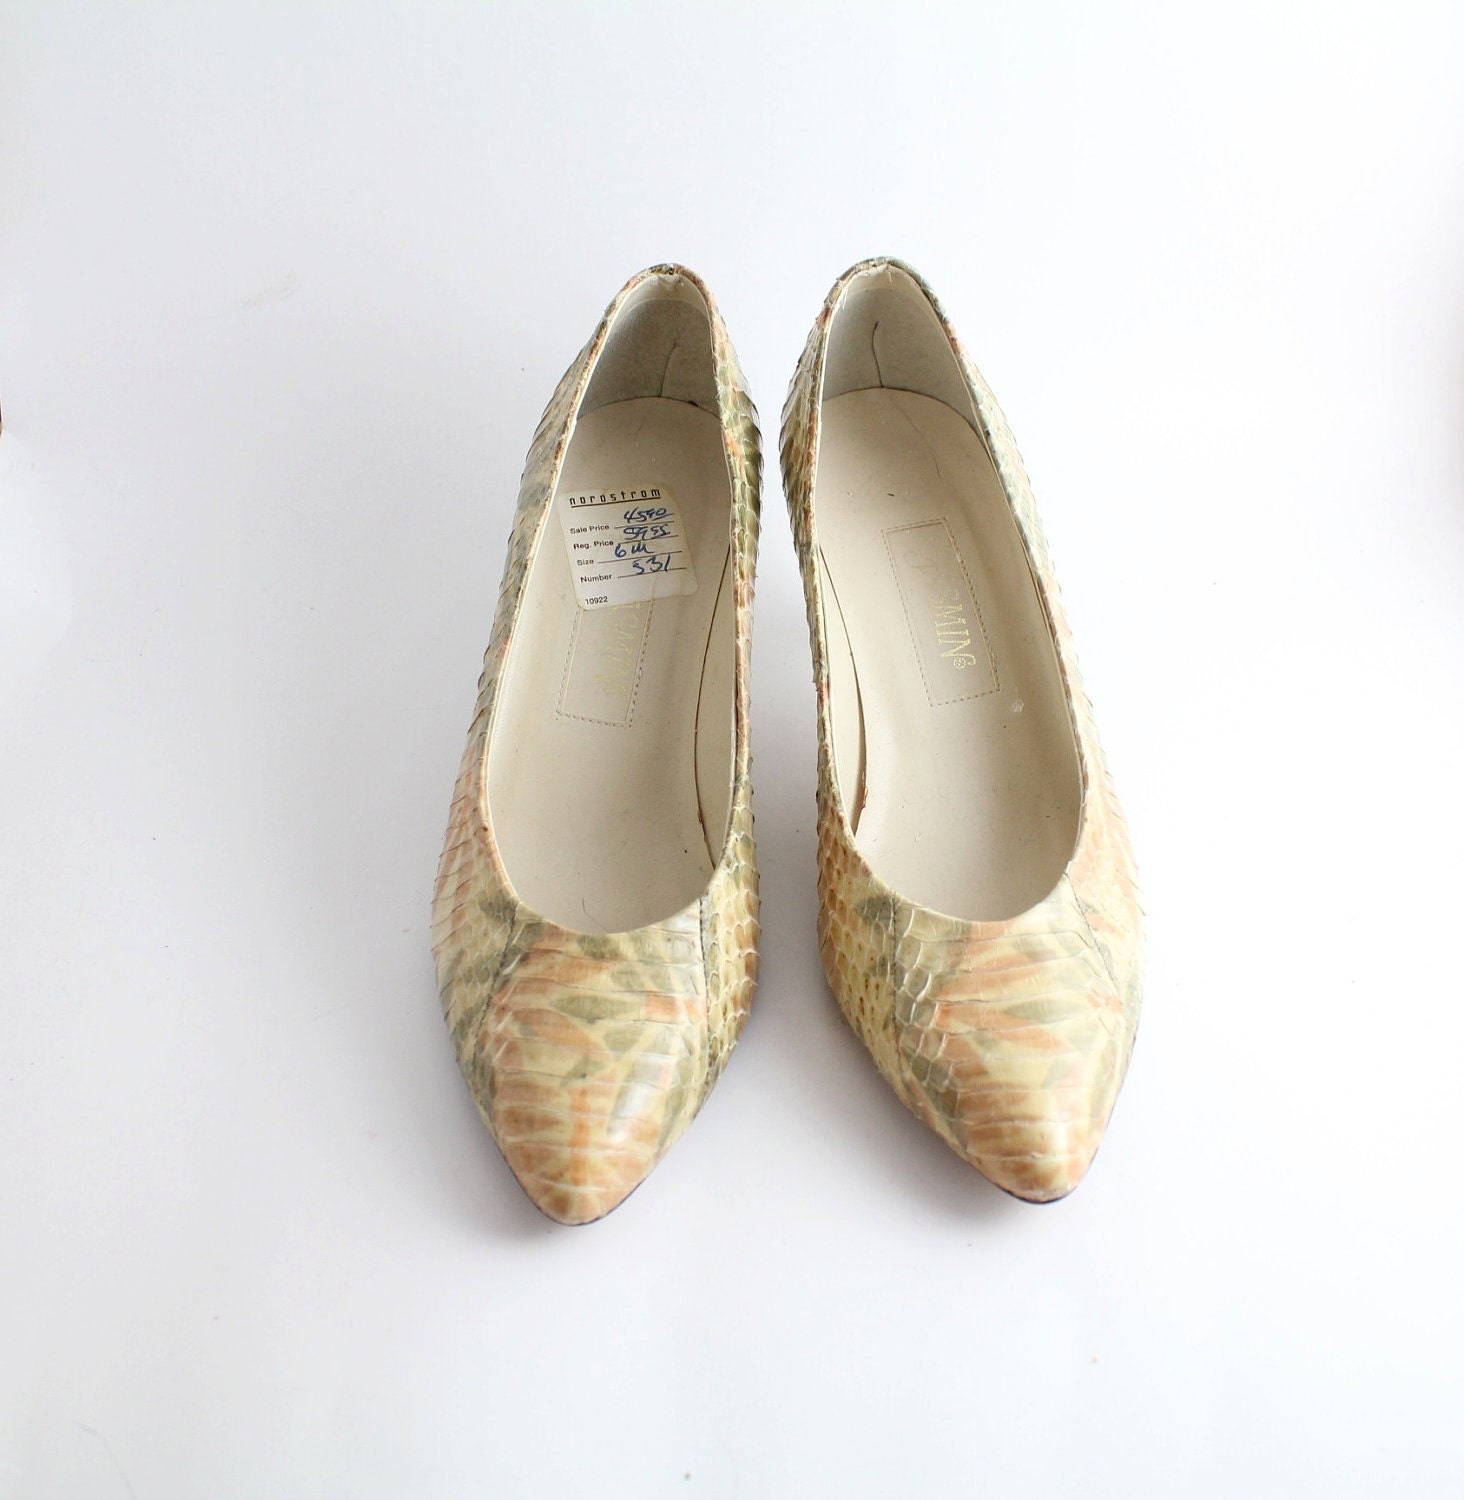 Size 6 Vintage Snakeskin Shoes Floral Print Snakeskin Court Shoes Muted ...